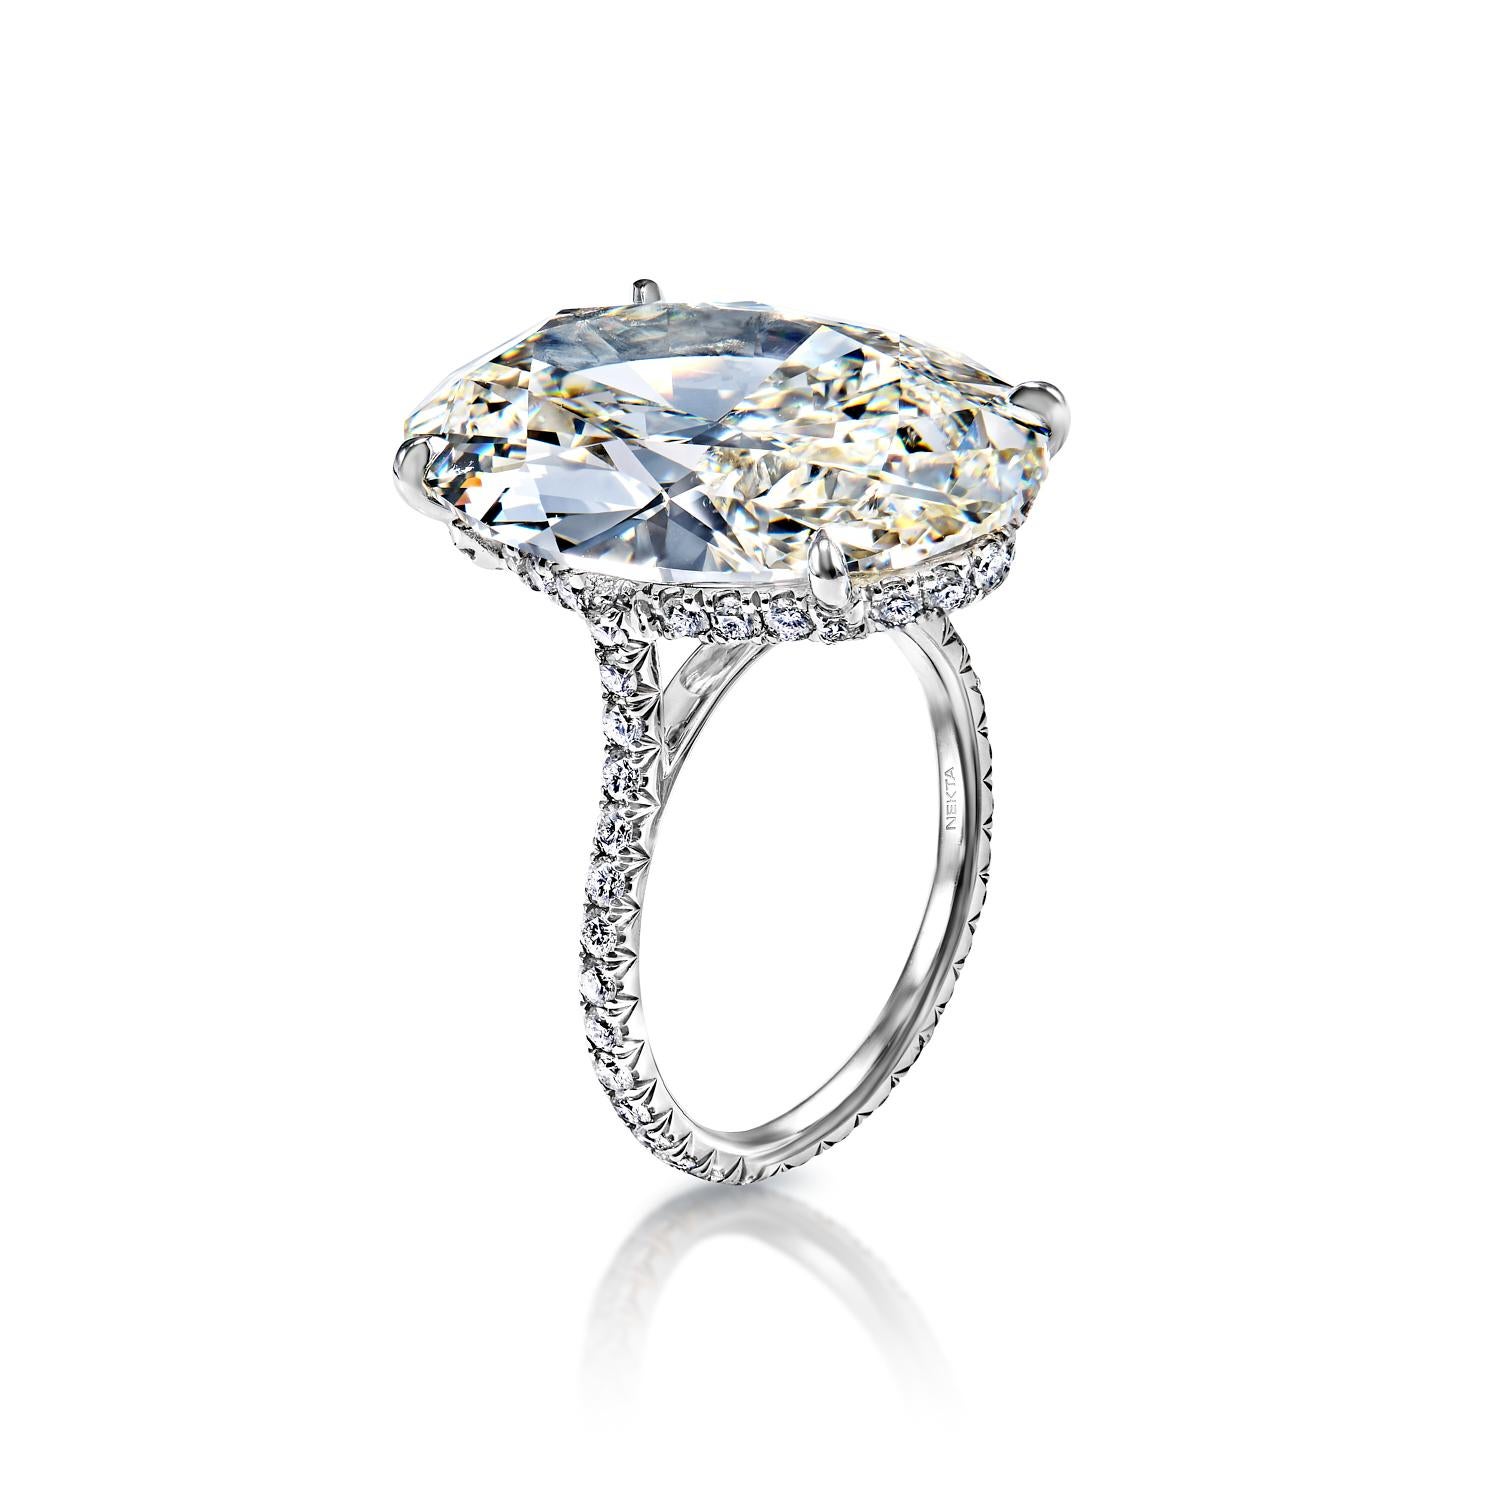 17 carat diamond ring